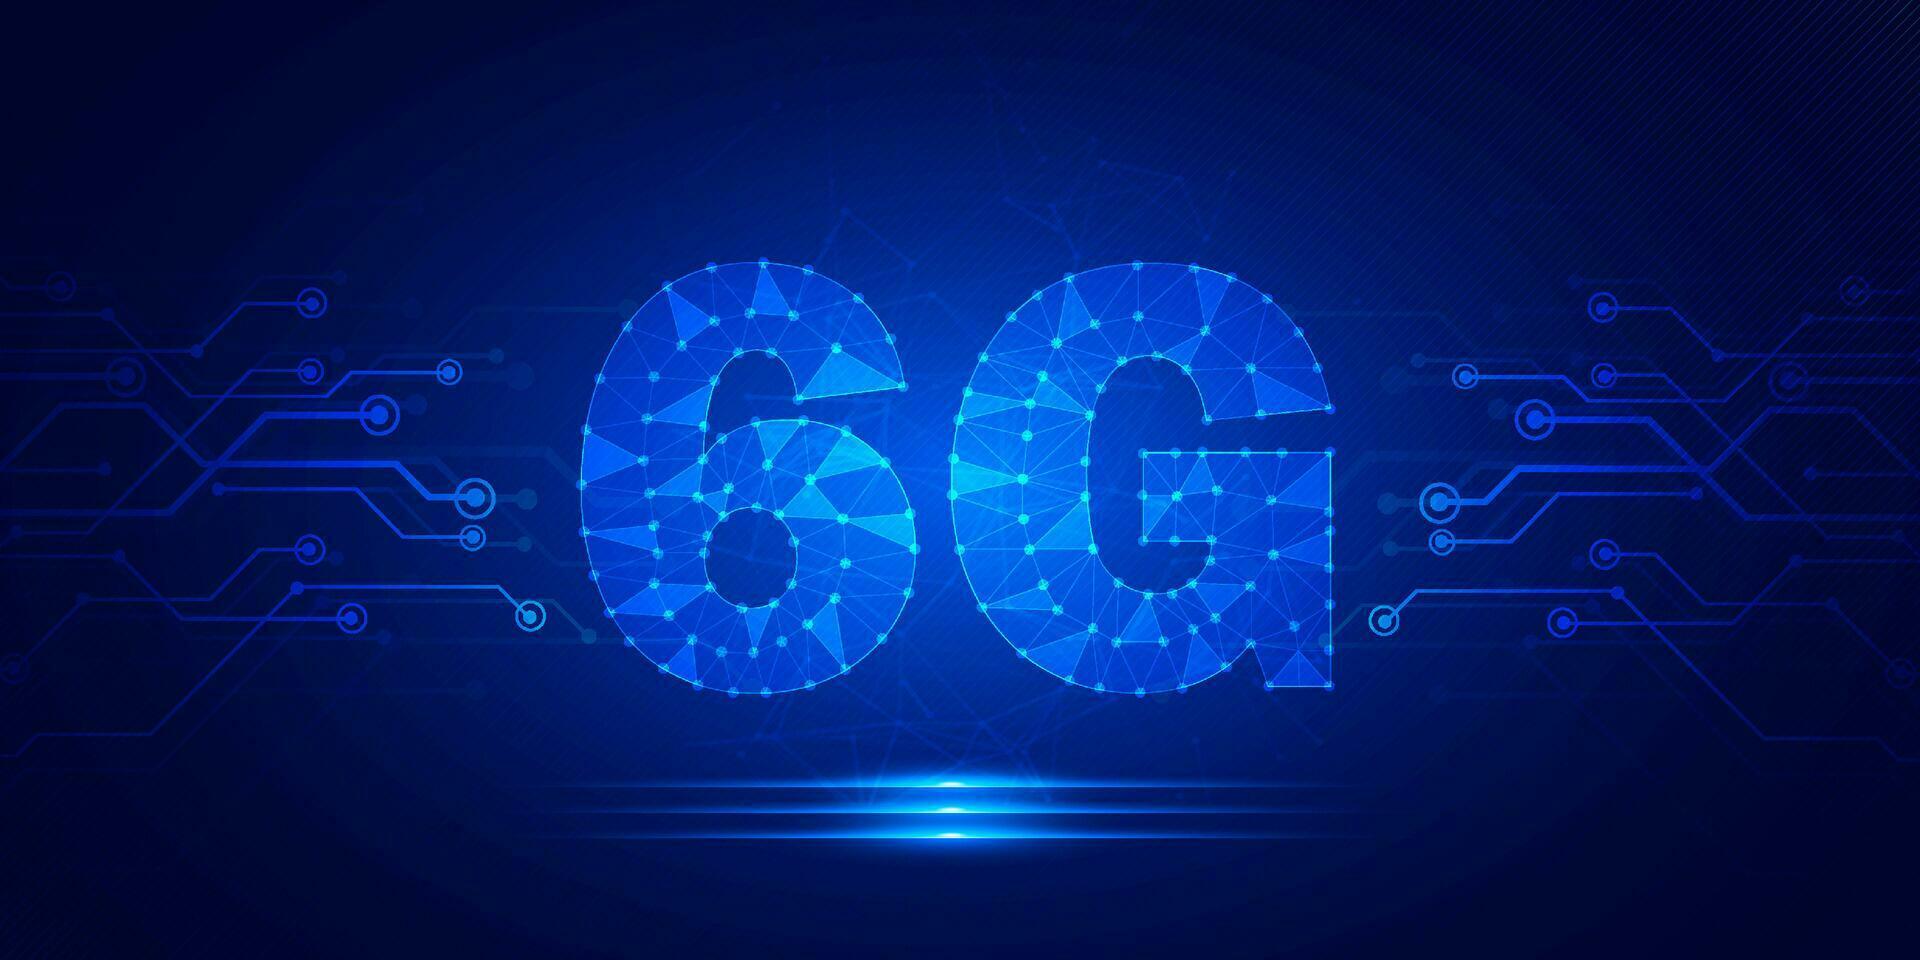 resumen digital tecnología futurista 6g Wifi conectar azul fondo, ciber Ciencias tecnología disposición, innovación futuro ai grande datos, global Internet red conexión, nube de alta tecnología ilustración vector